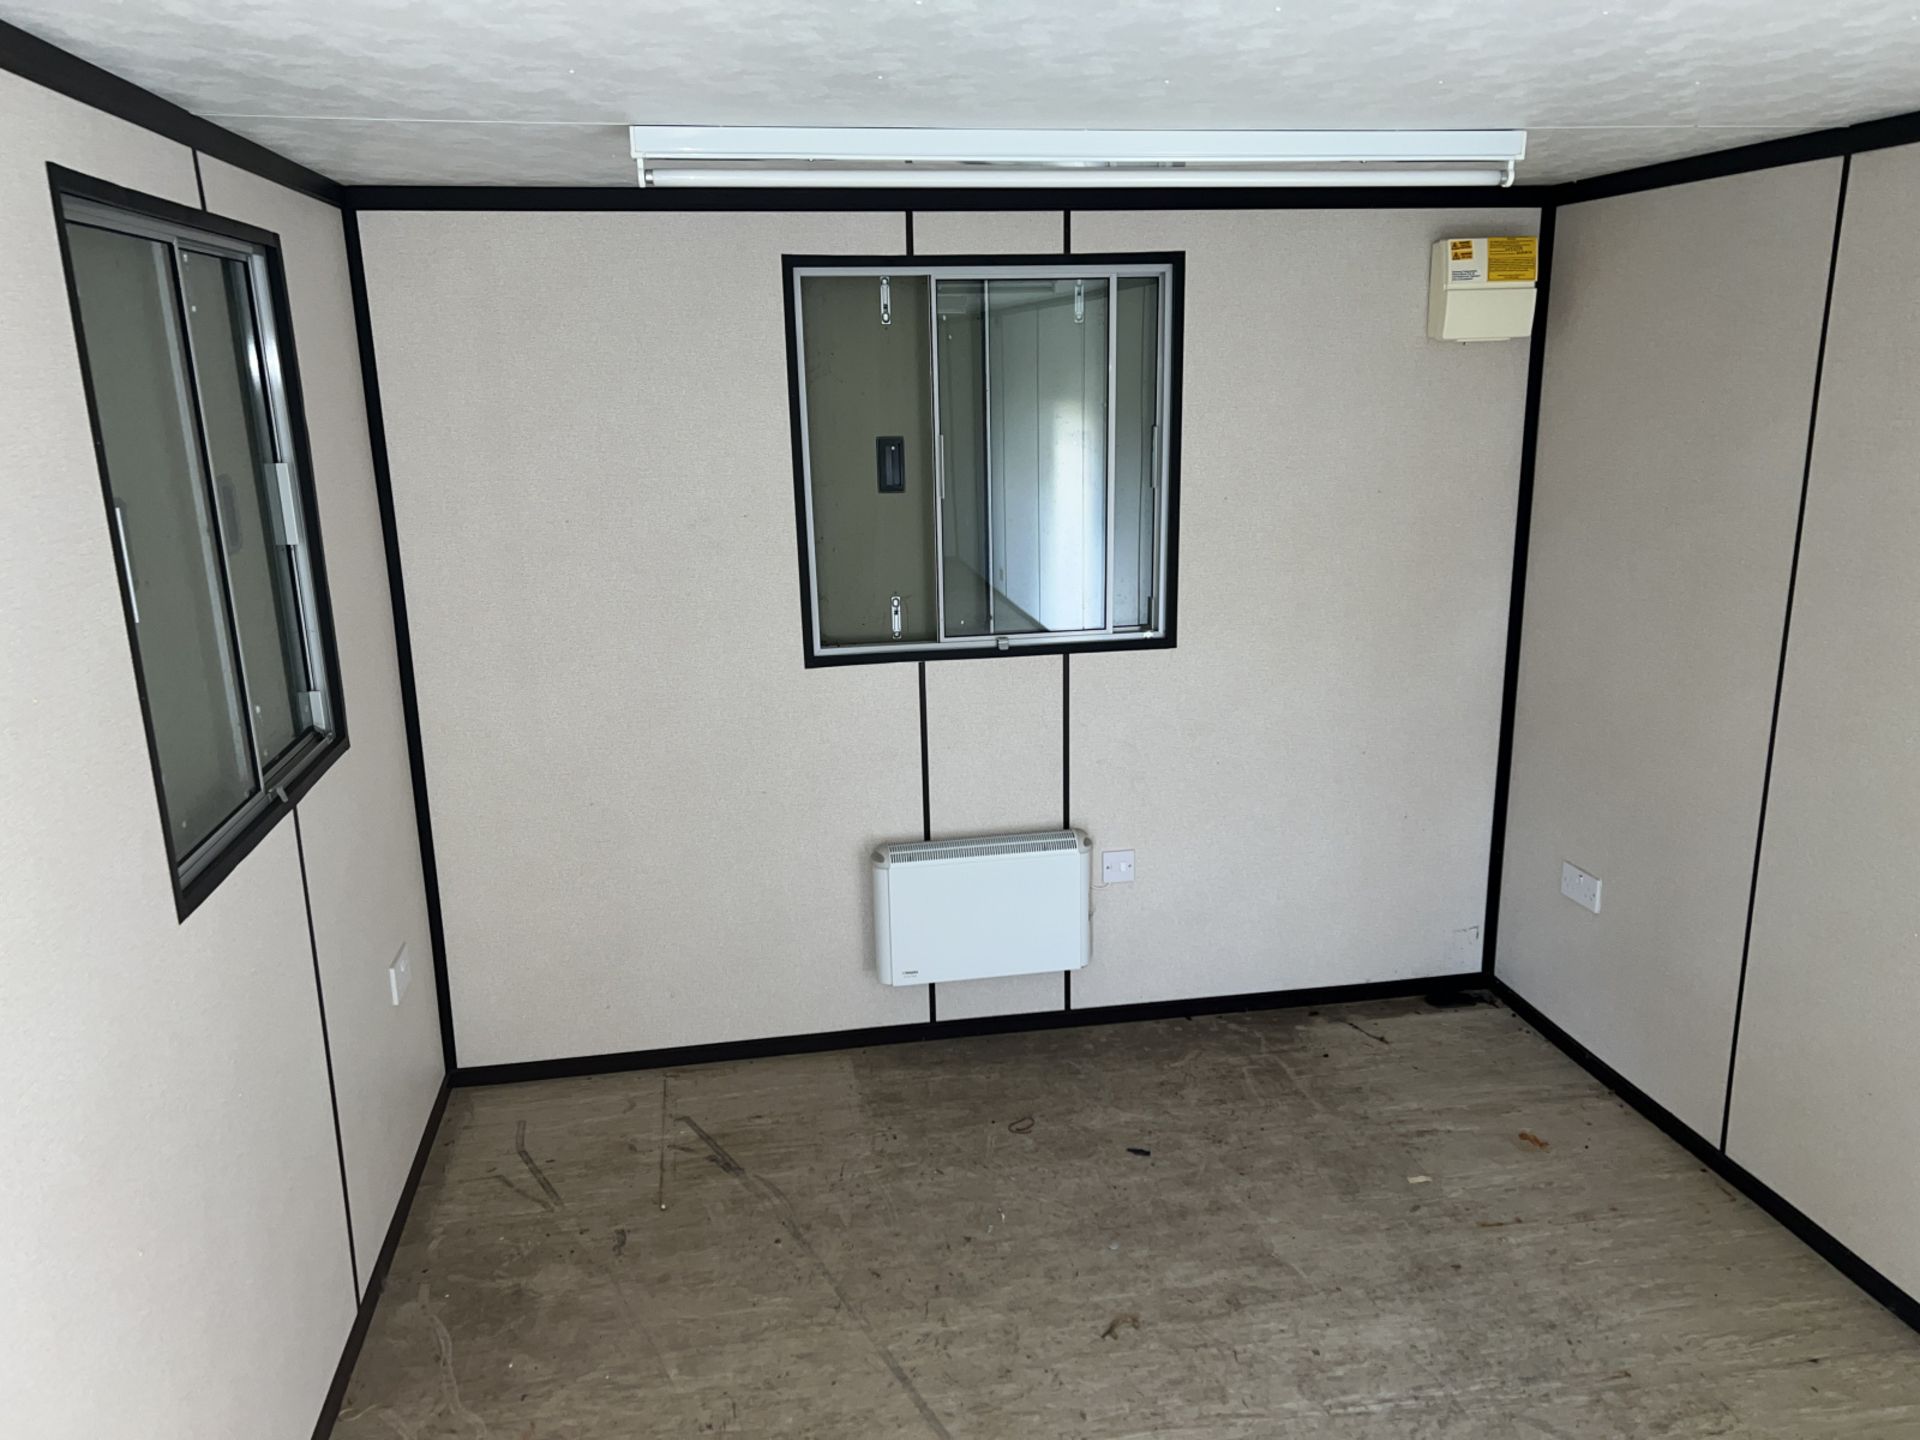 30 foot portacabin office suite - 230V fuse board, 5x tubular lighting, 2x heaters, 3x windows - Image 7 of 16